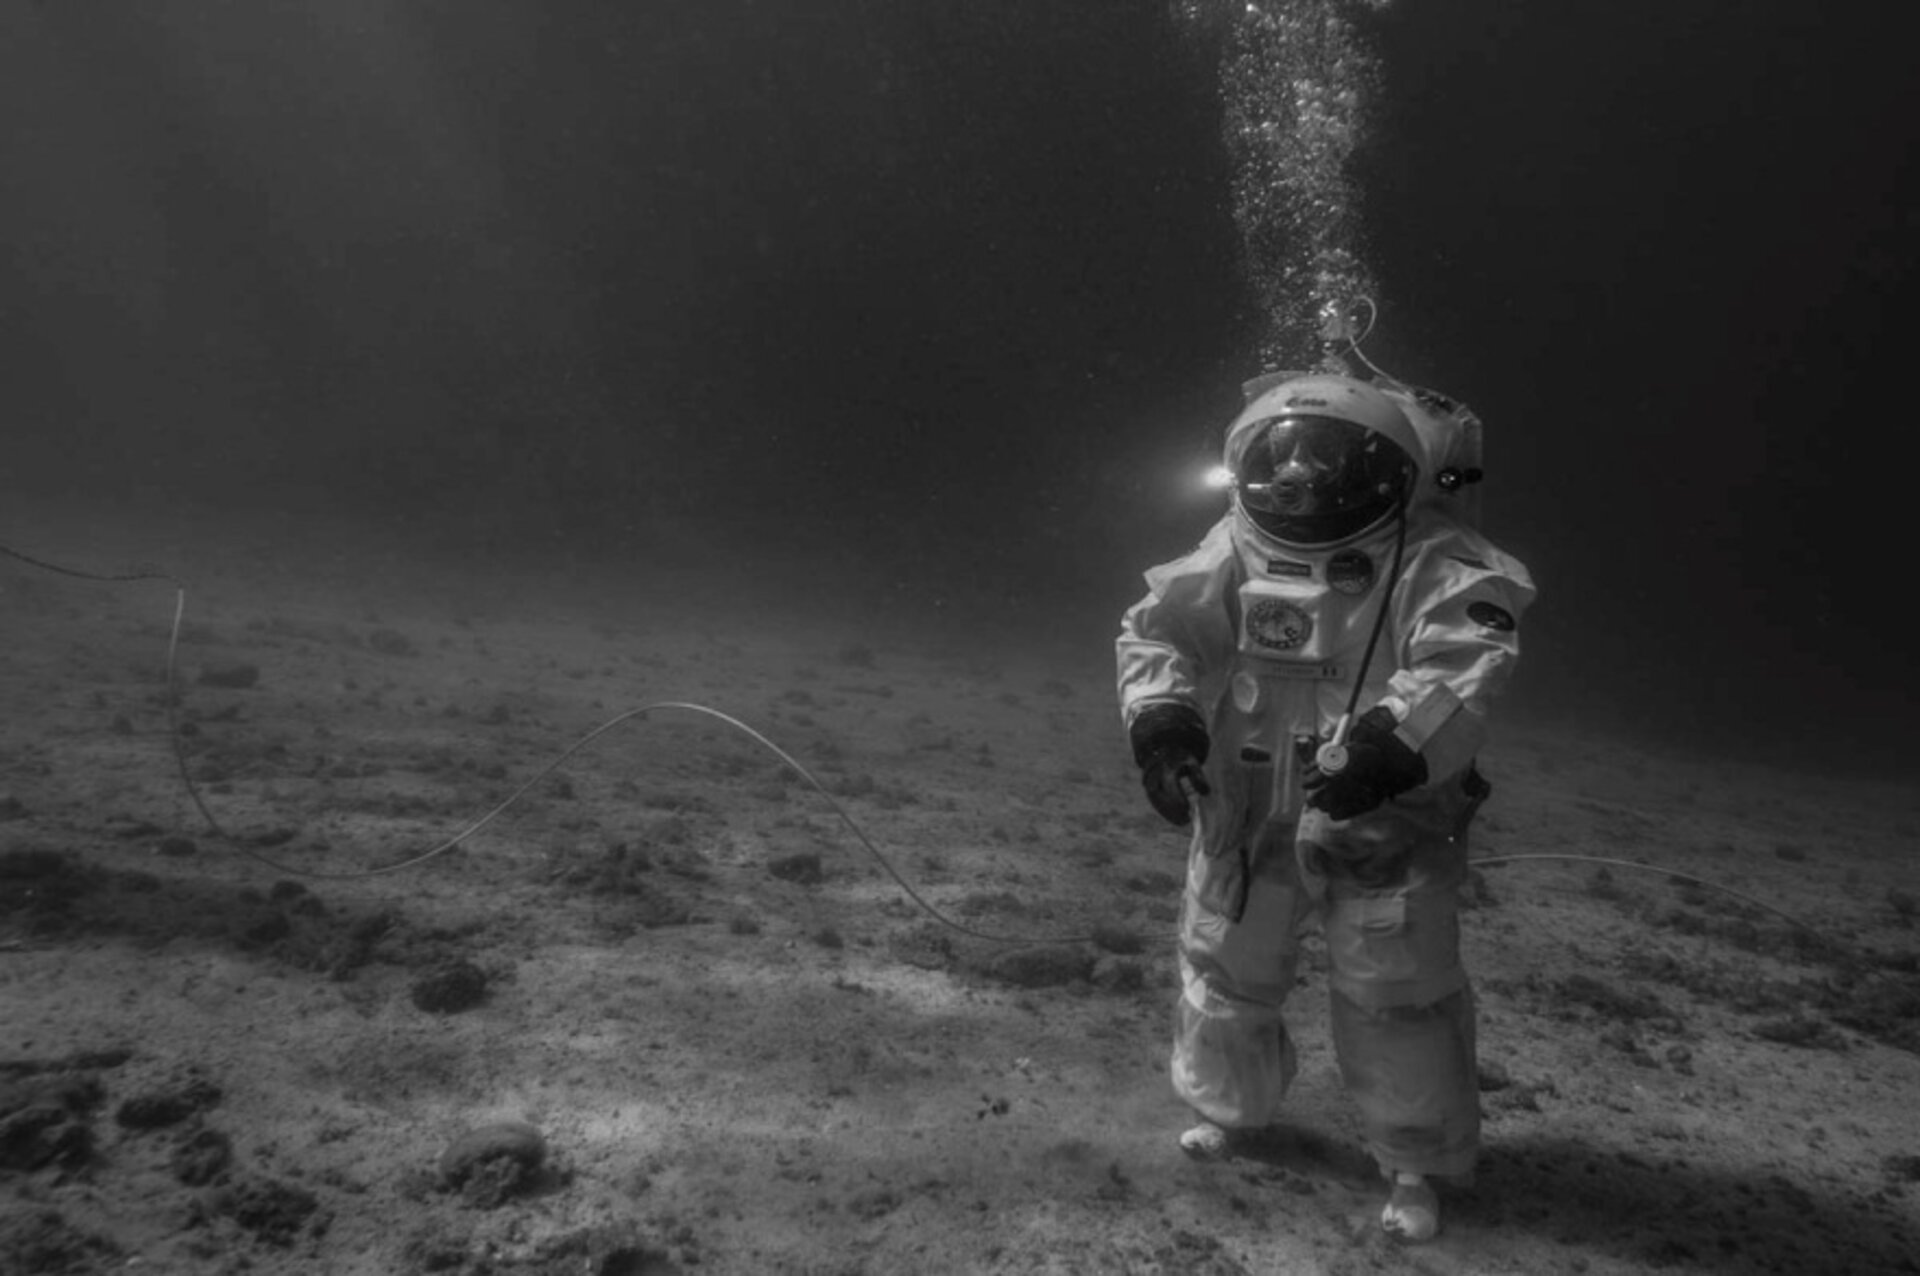 Underwater testing with Jean-François Clervoy 